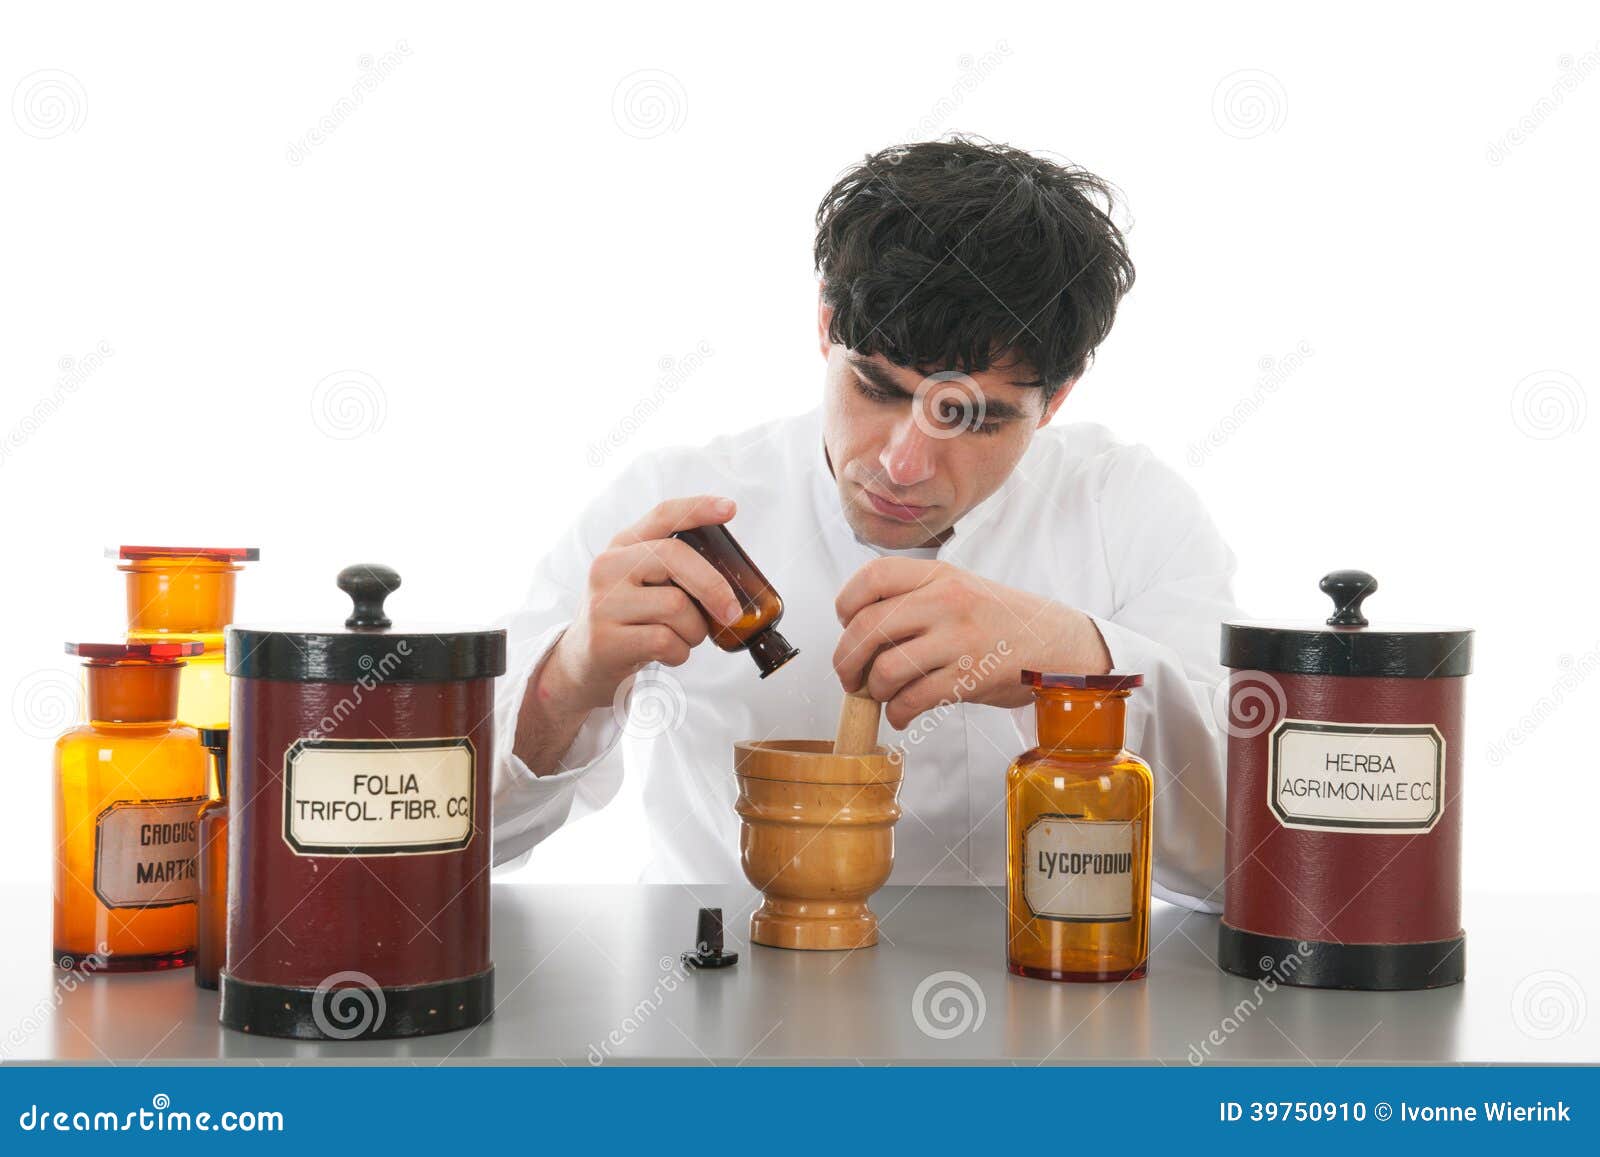 pharmacist at work